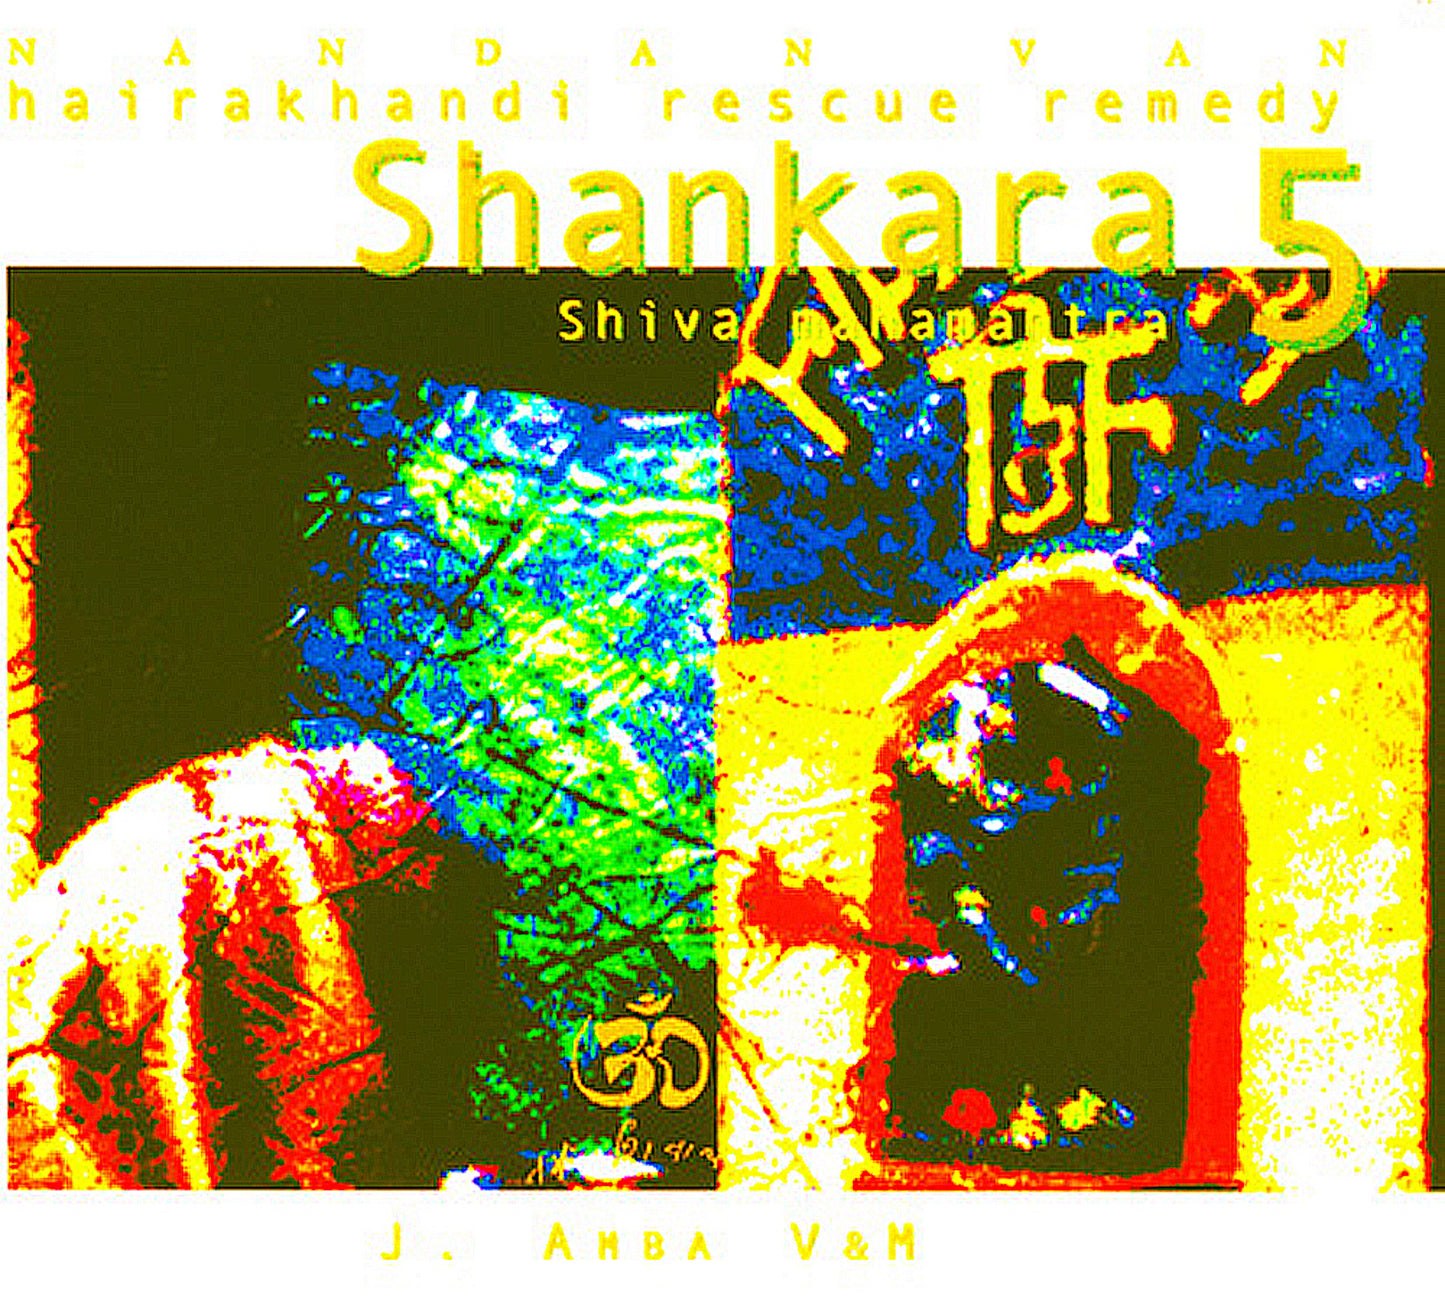 Shankara, Shiva Mahamantra, Bhajans - Hairakhandi Rescue Remedy 05 - Hindu Sanatan Dharma Spirituality Music Therapy for Meditation